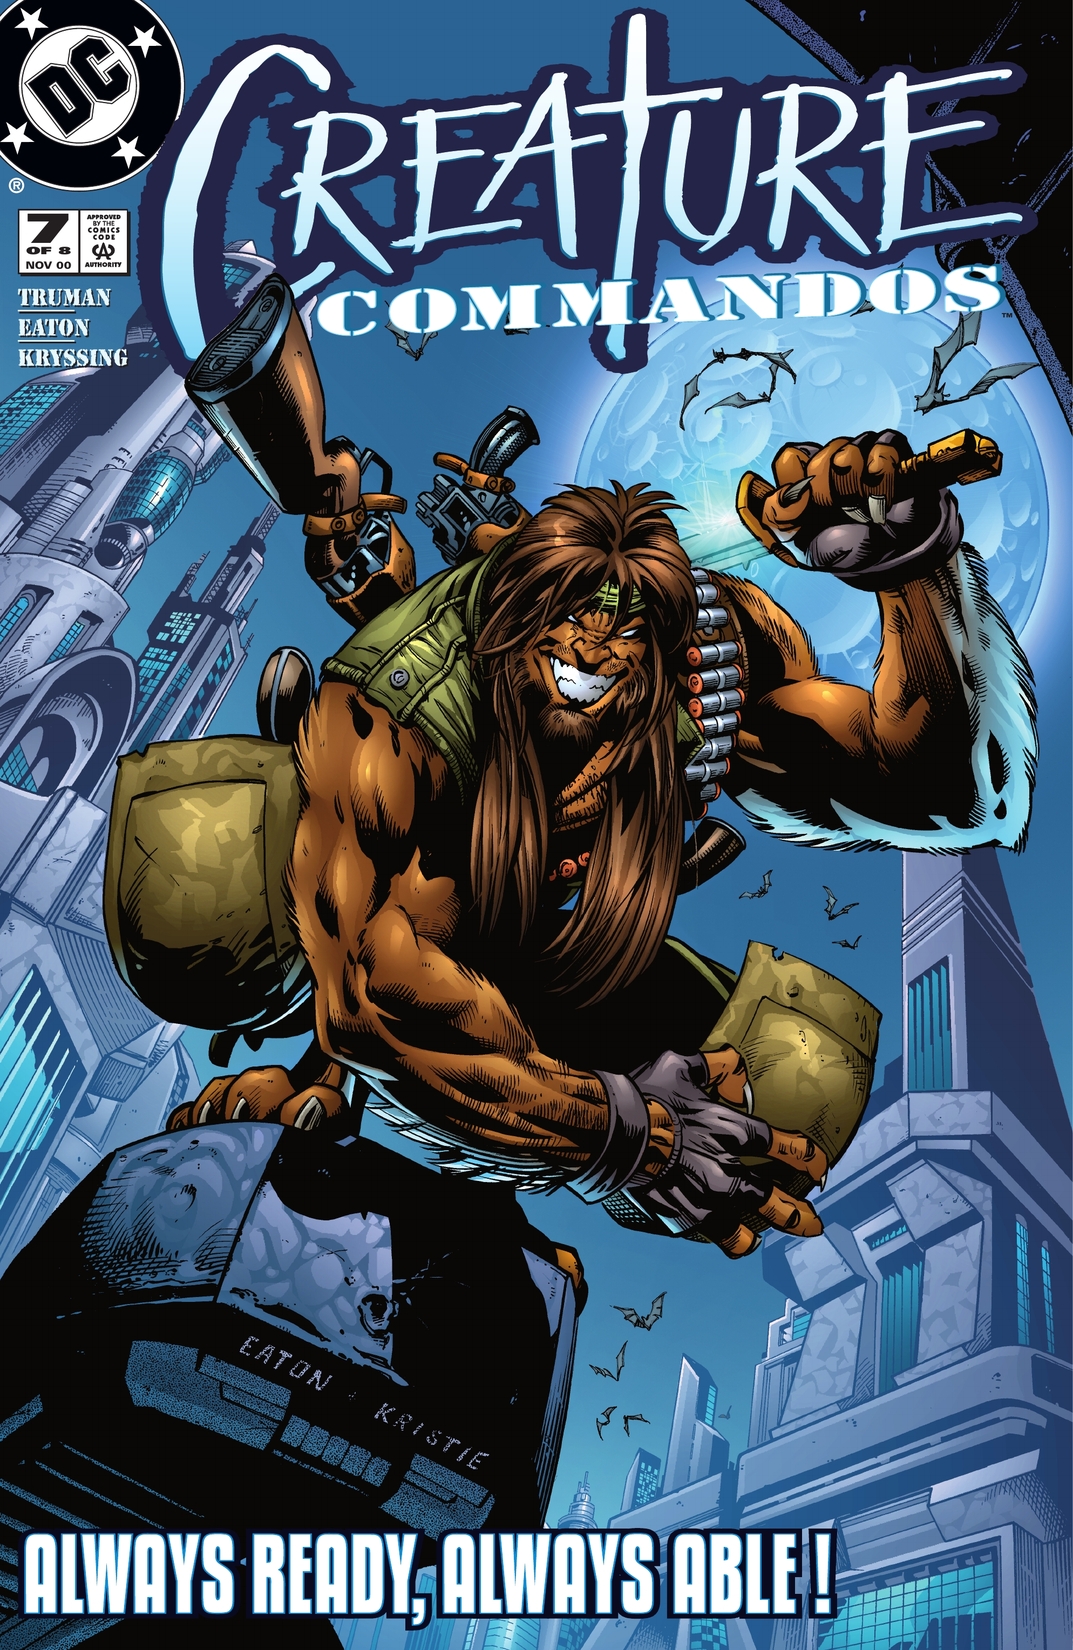 Creature Commandos #7 preview images